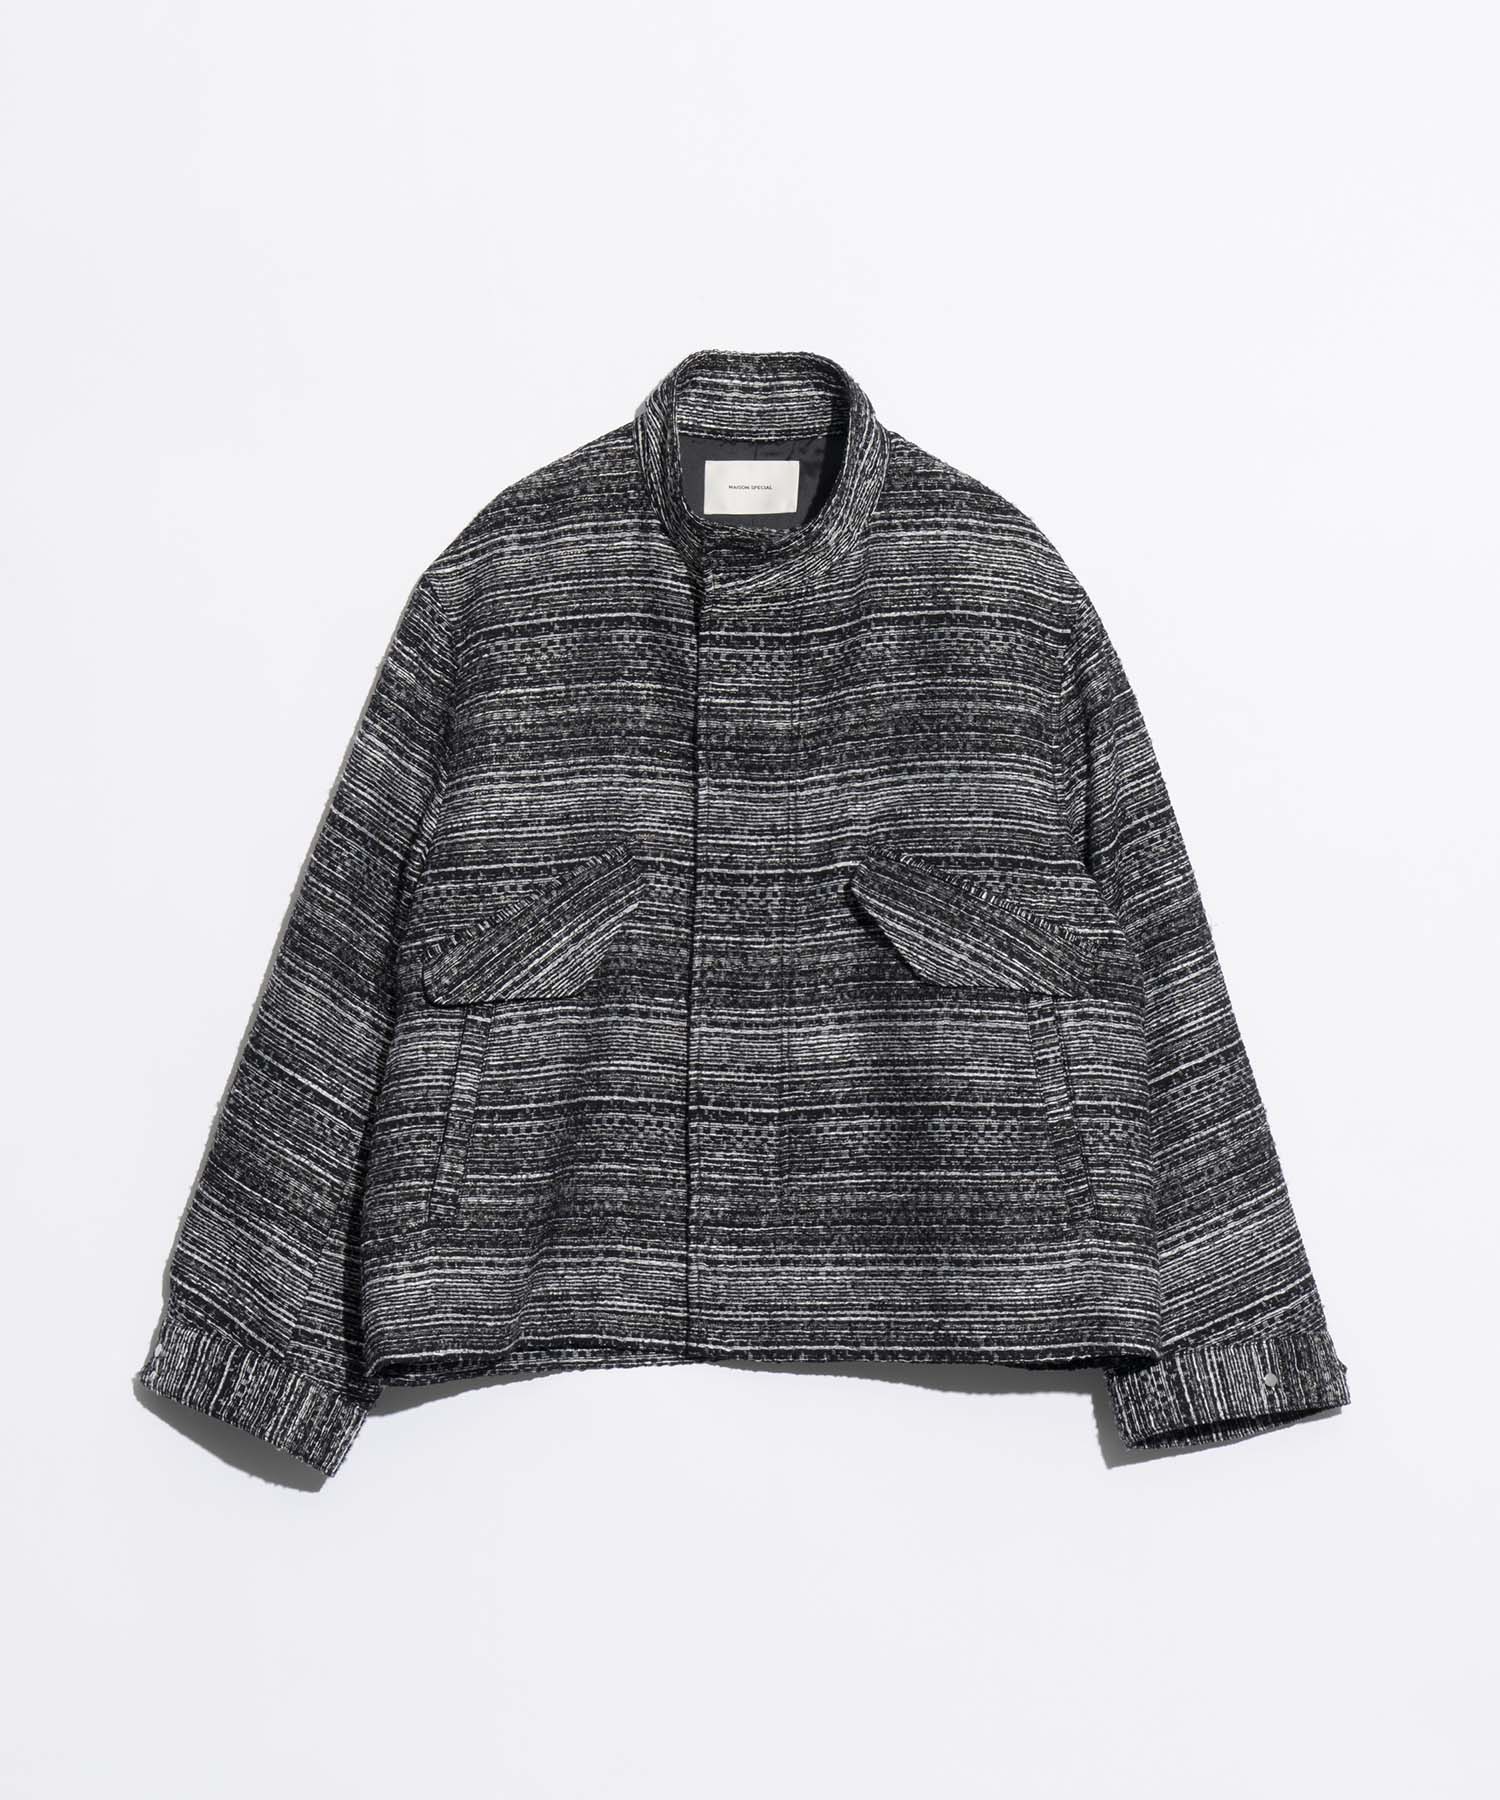 【SALE】Mall Tweed Jacquard Dress-Over Short Mods Coat